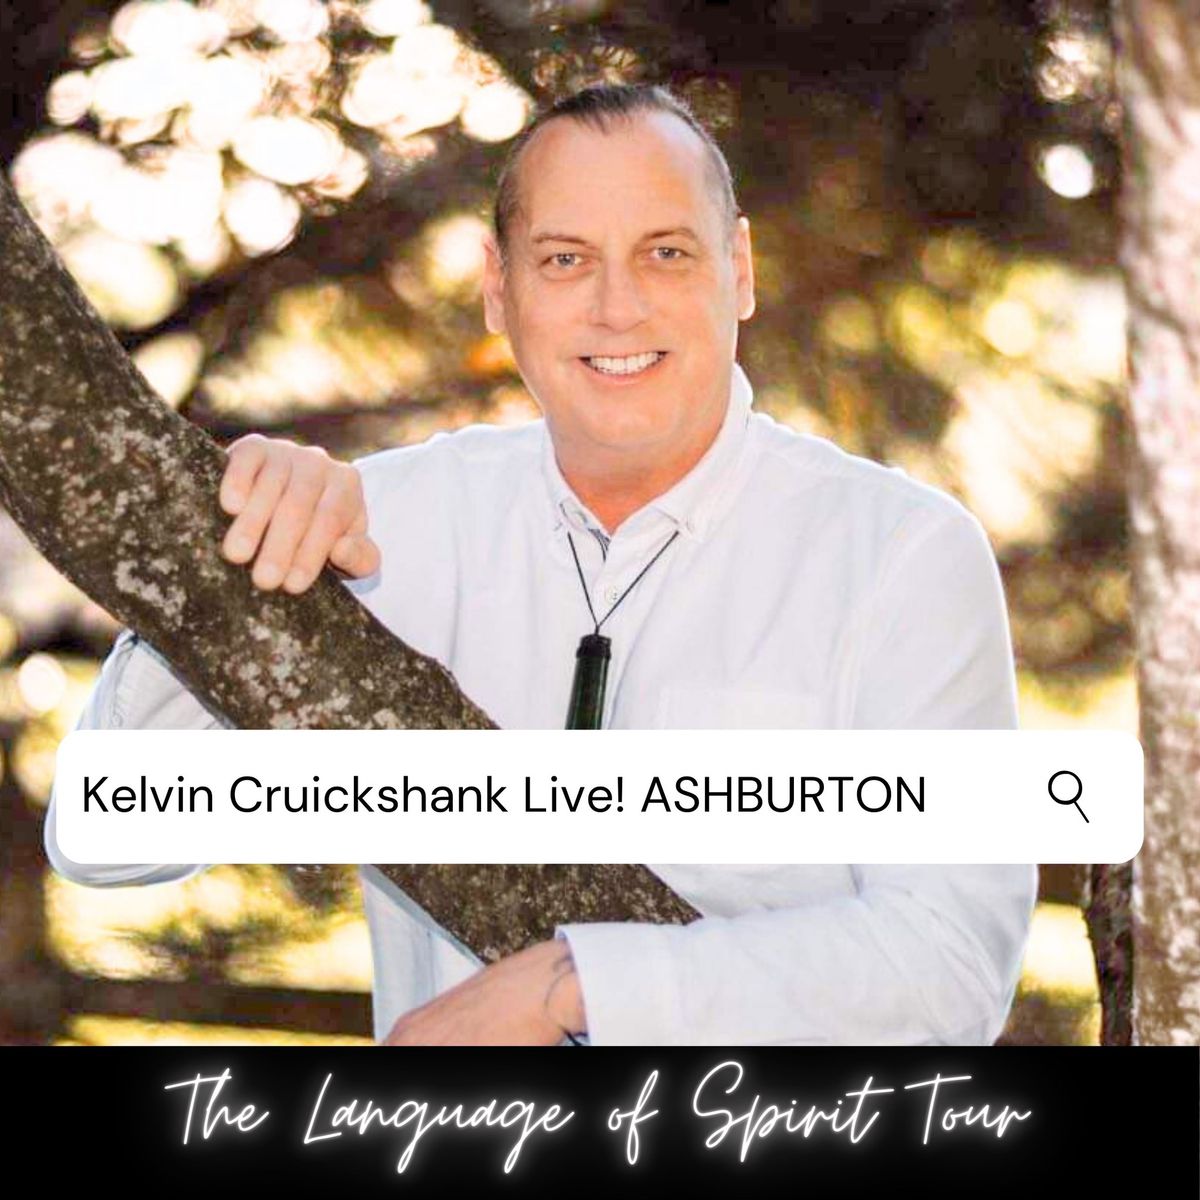 Kelvin Cruickshank Live -  "The Language of Spirit" Tour - ASHBURTON